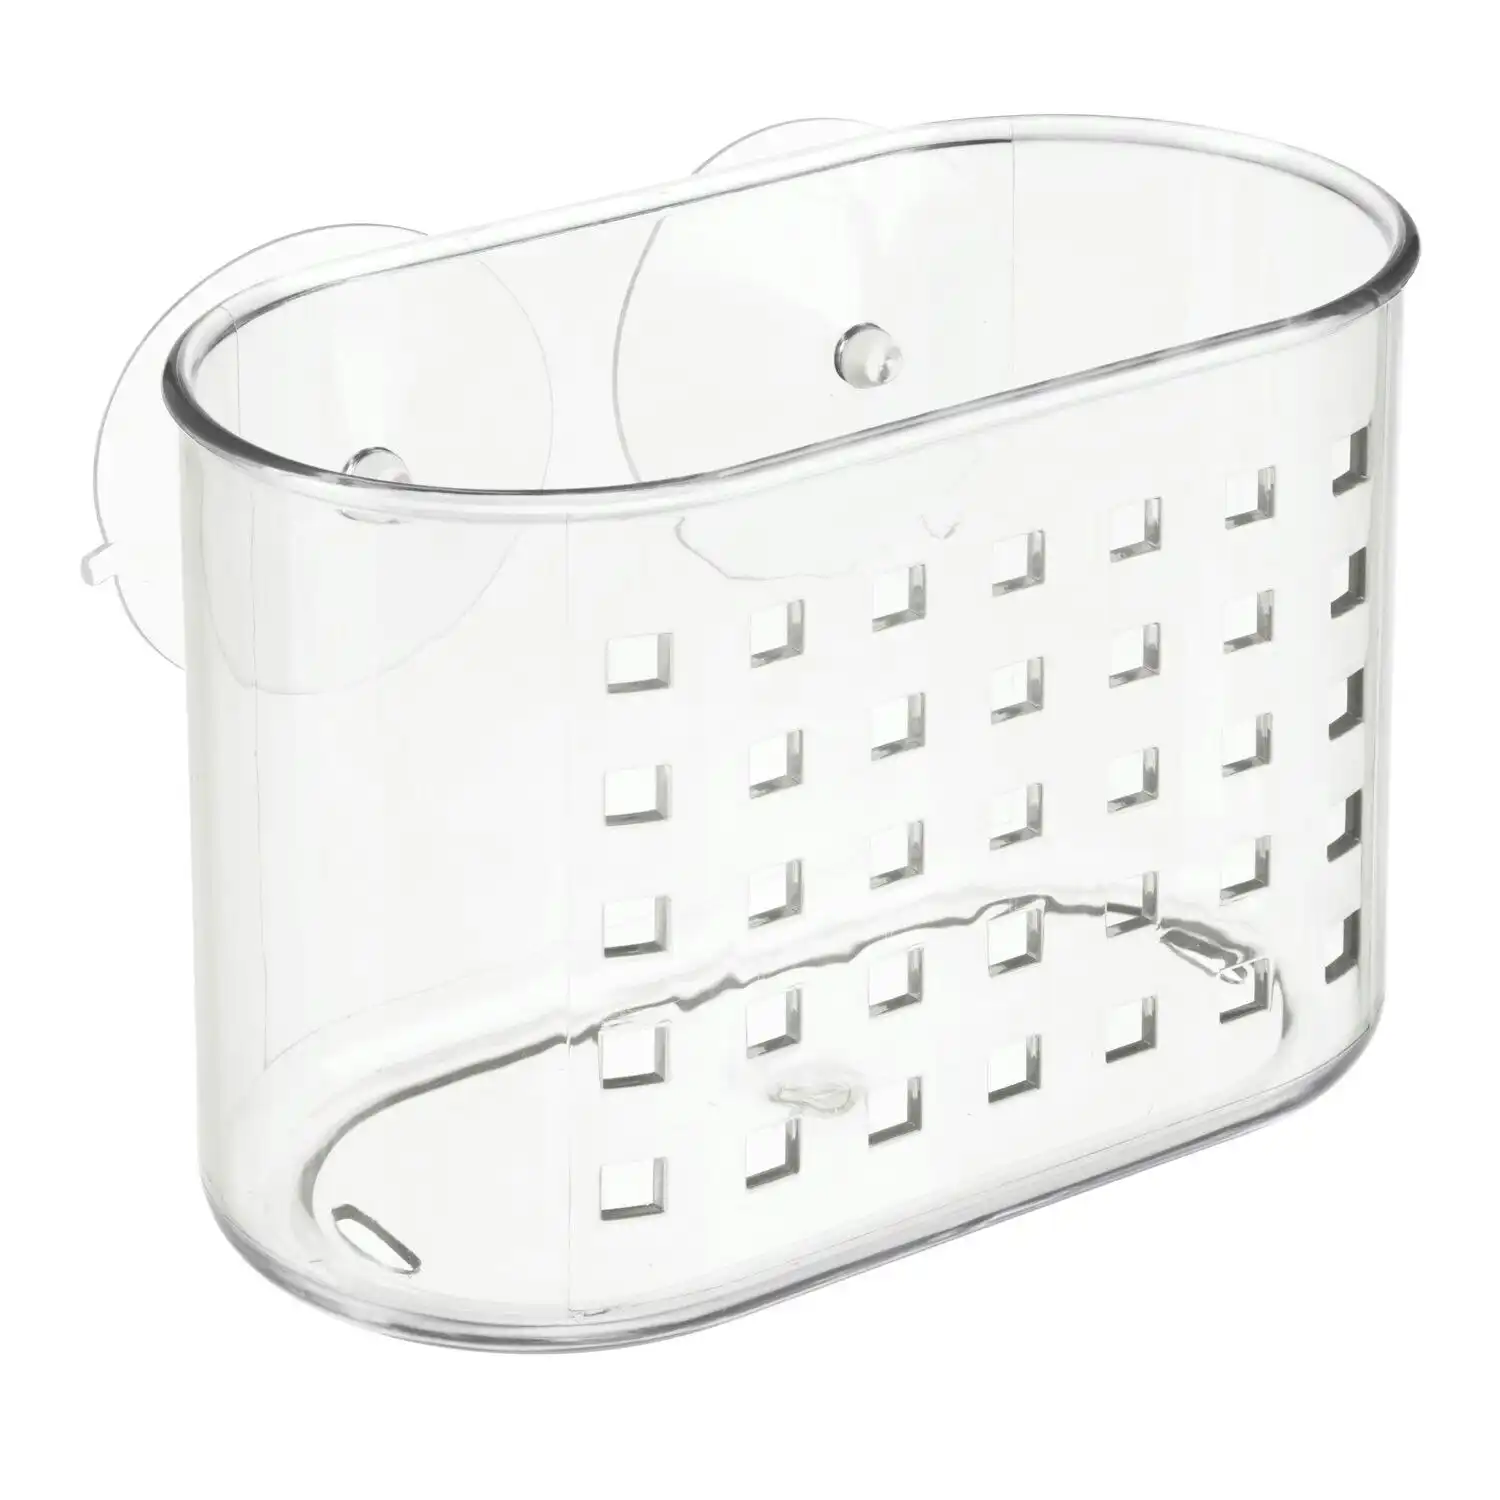 Idesign Classic 18x9.5cm Suction Mini Shower Basket Bath Organiser Storage Clear